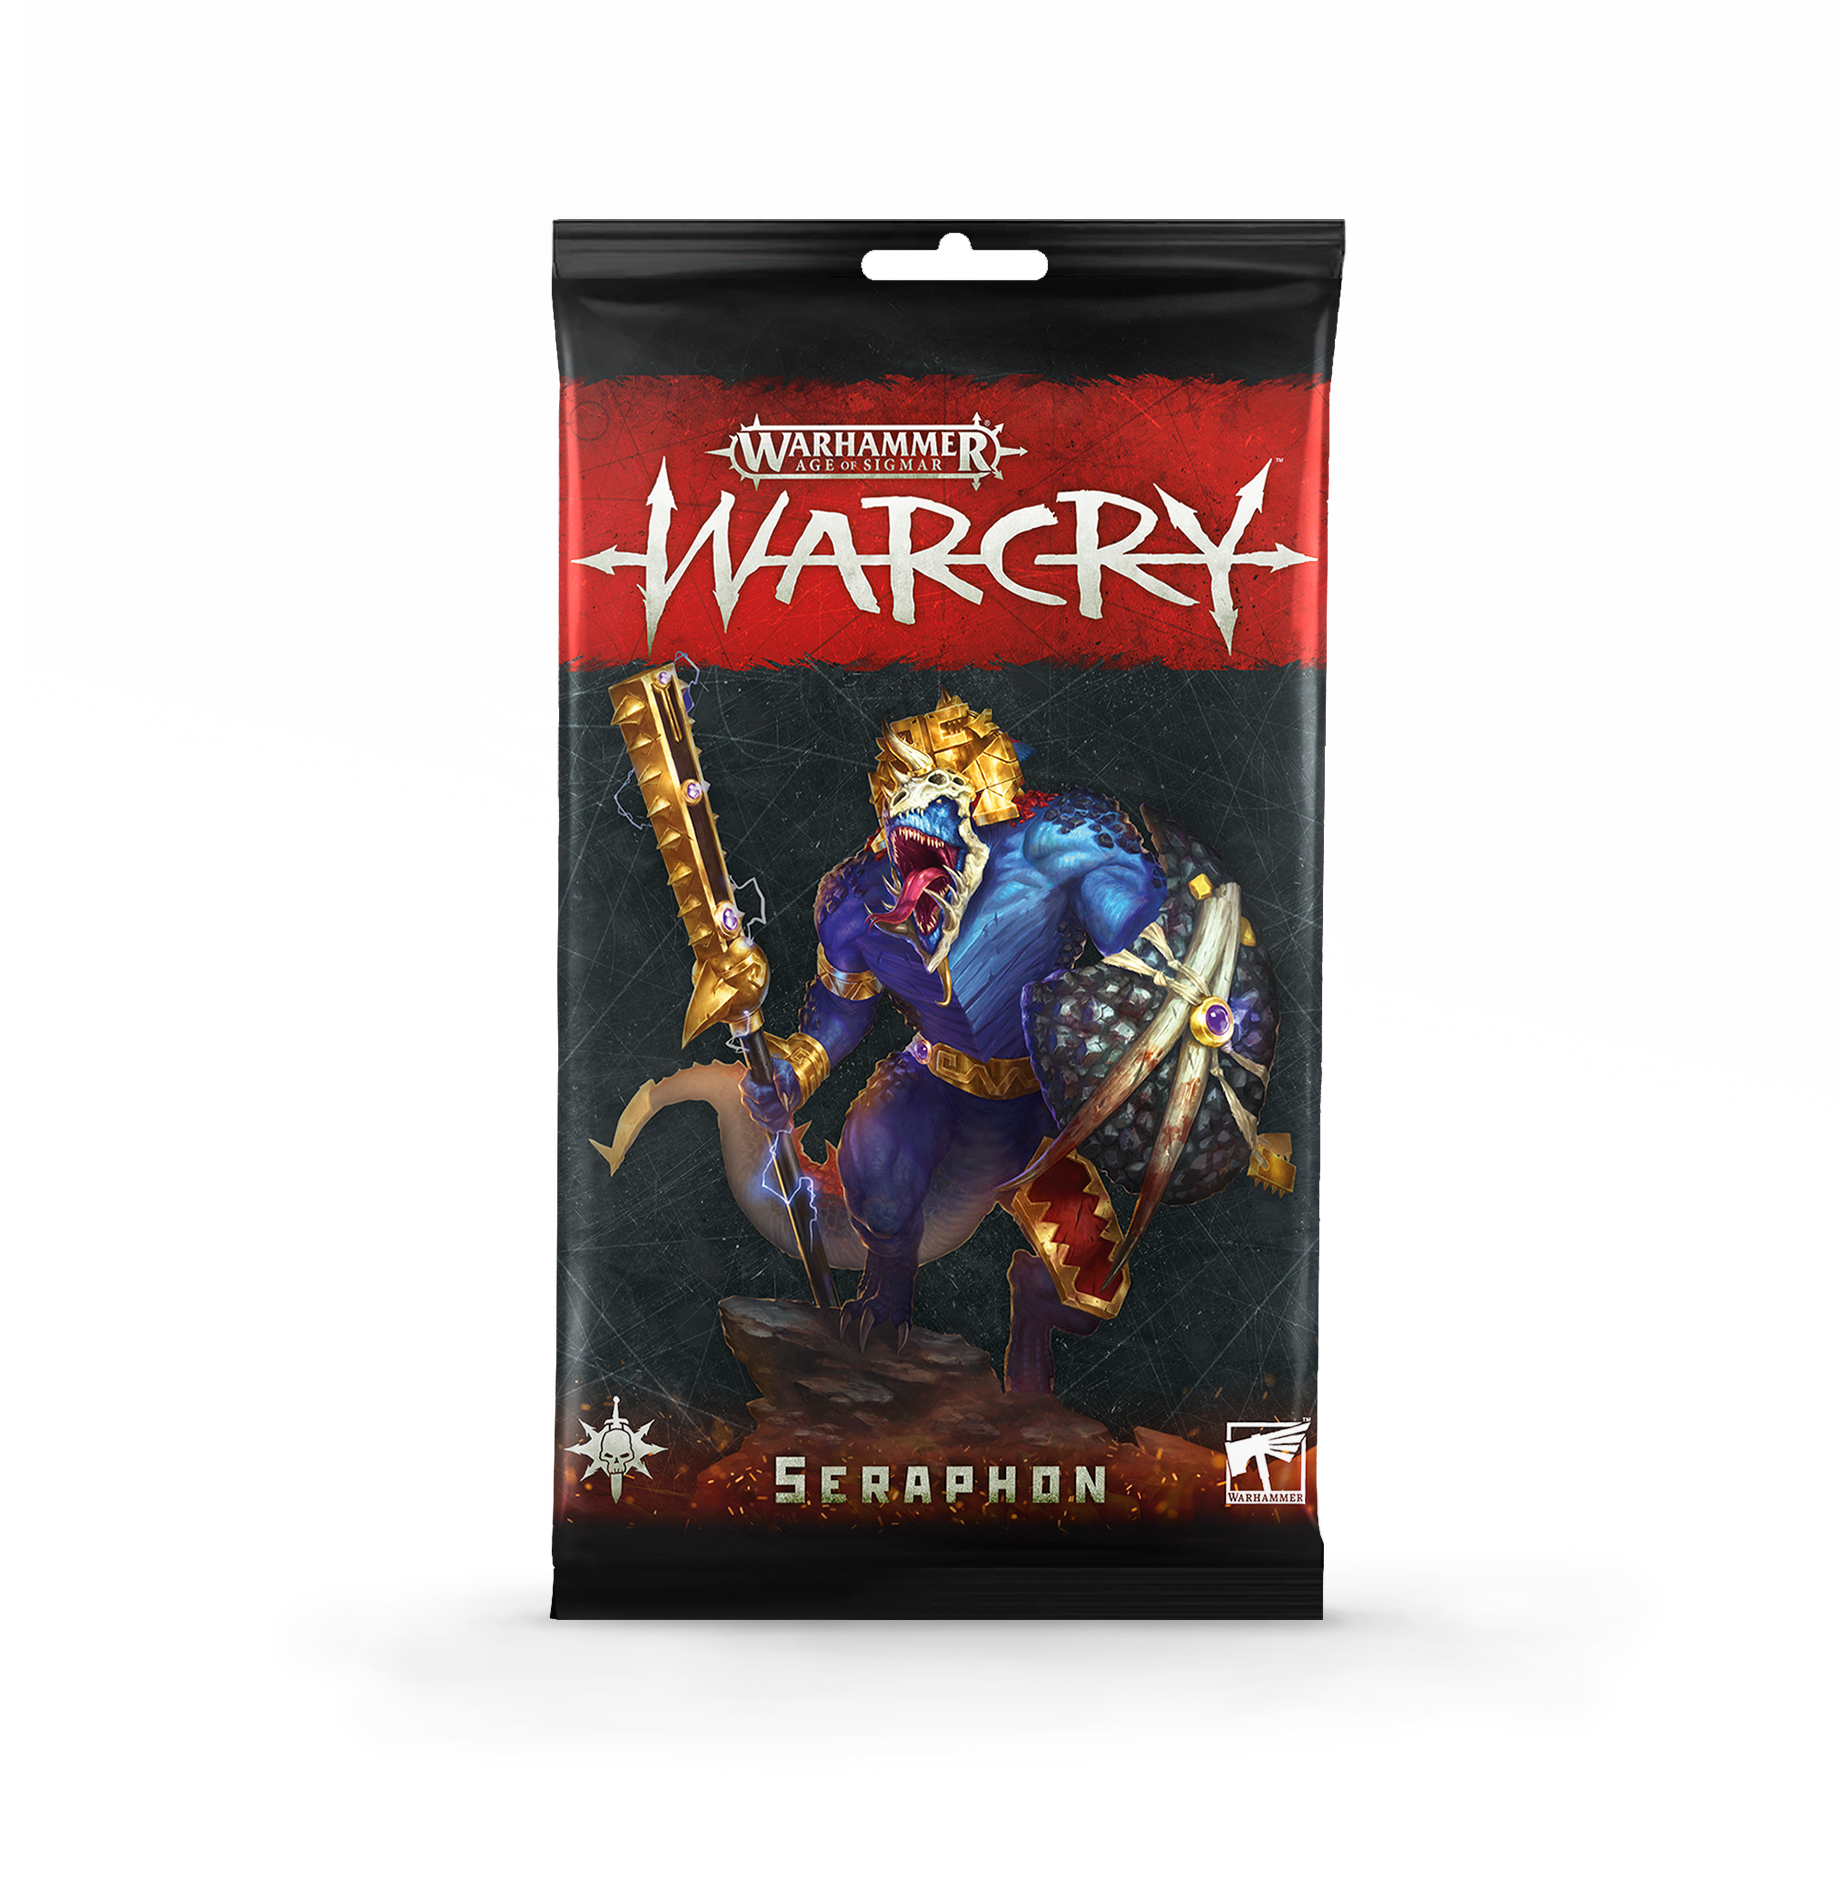 Warhammer cards. Warcry Seraphon. Warcry: Skaven Card Pack. Seraphon Cards. Warcry Rulebook pdf.